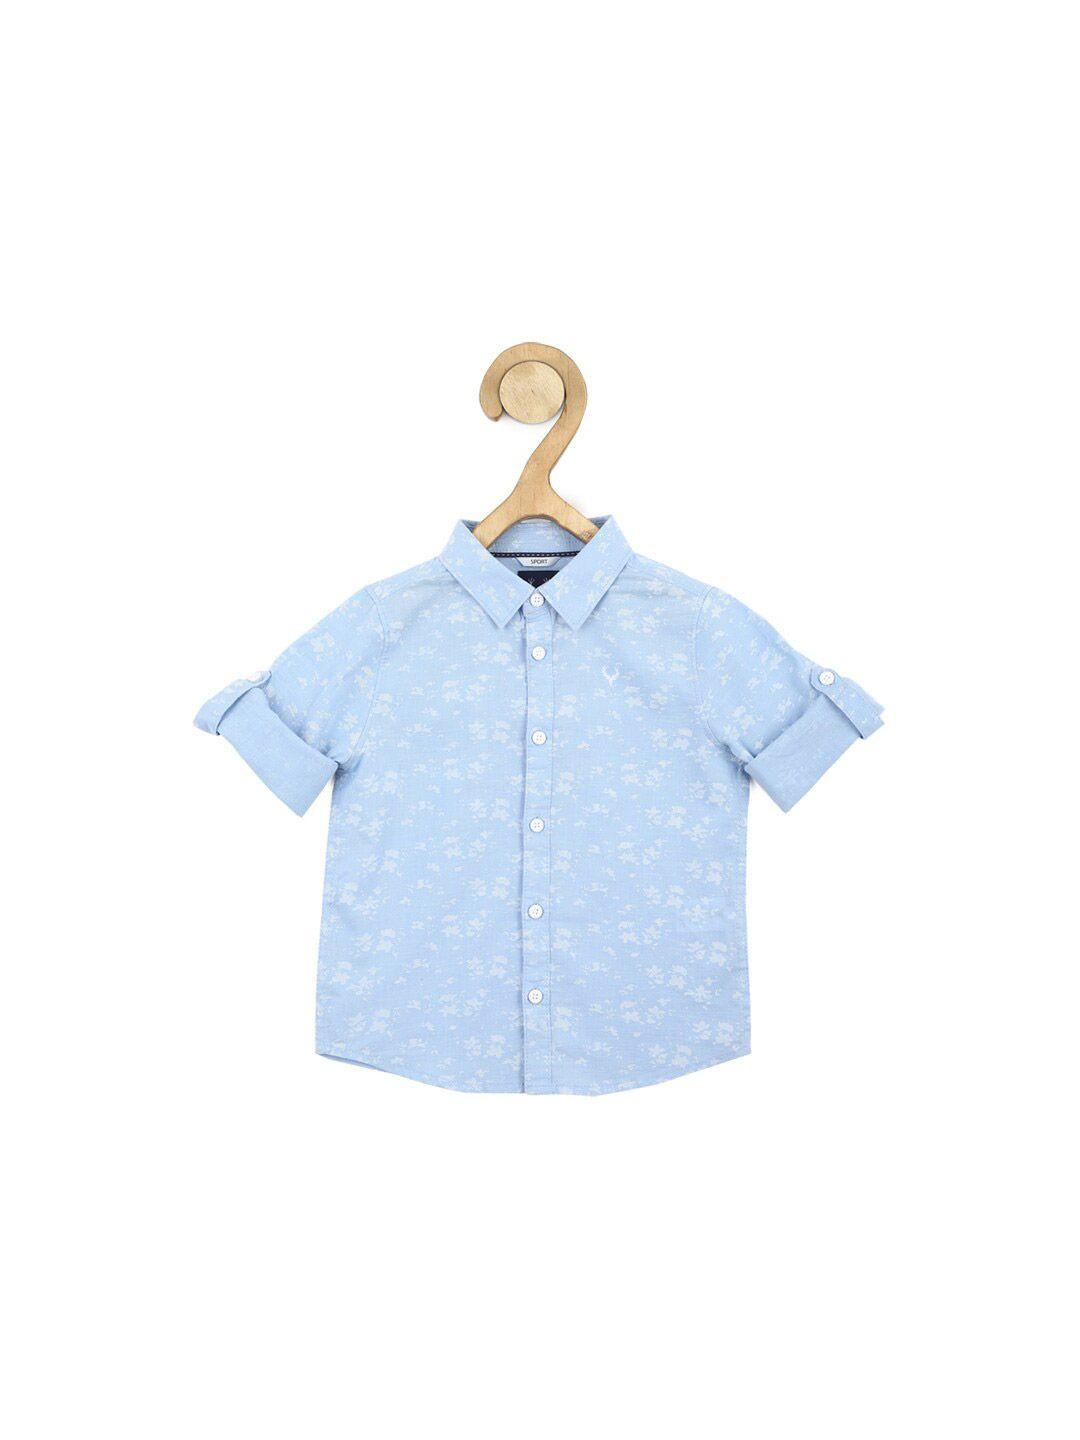 allen solly junior boys abstract printed pure cotton casual shirt